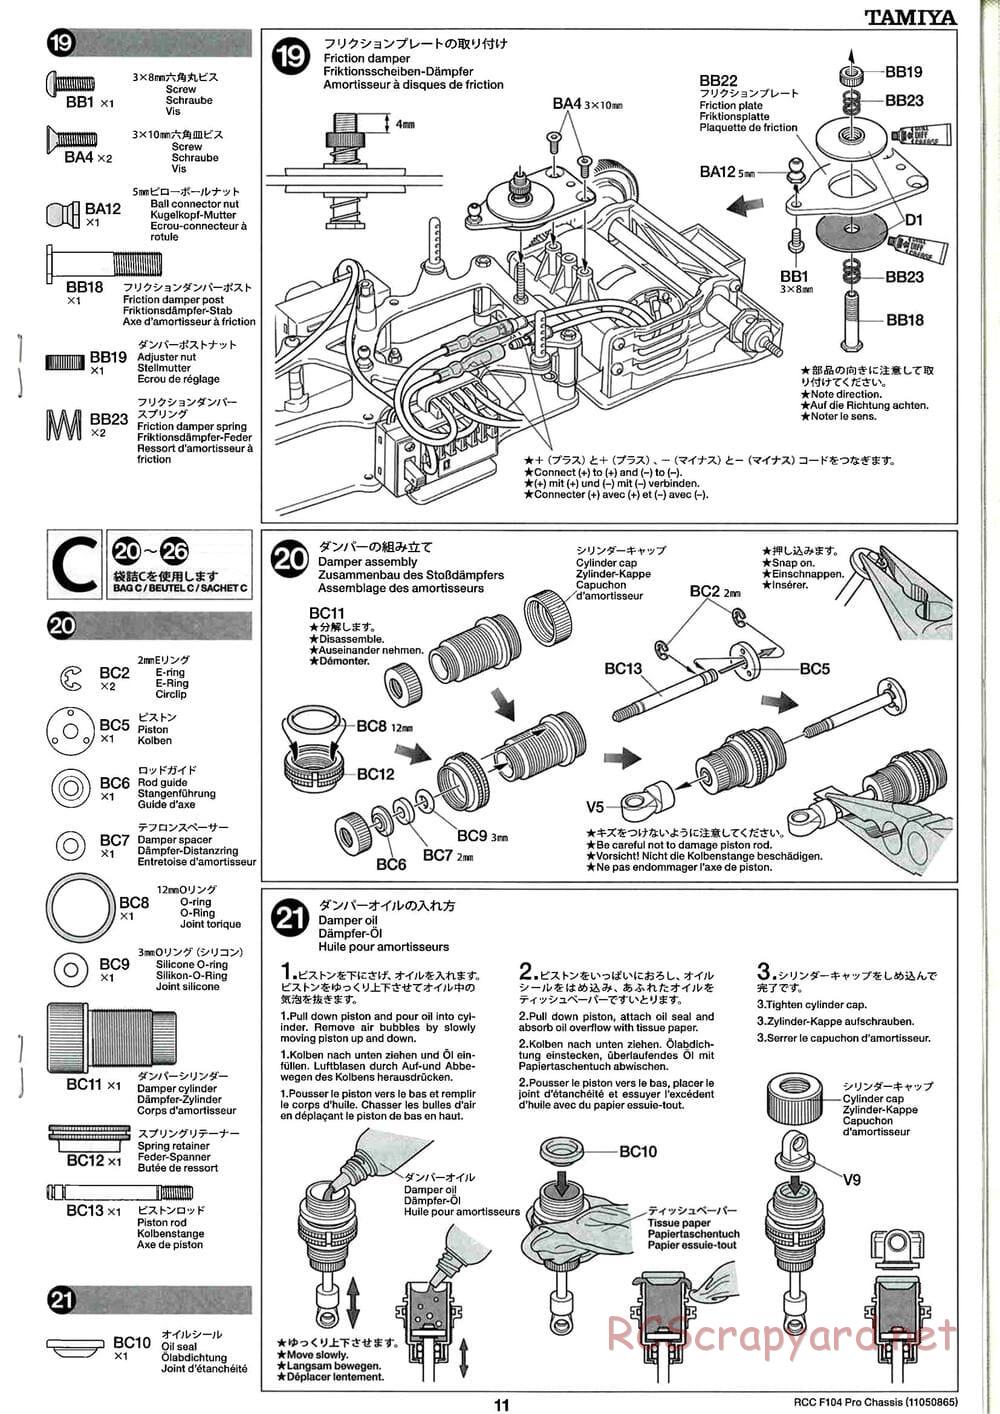 Tamiya - F104 Pro Chassis - Manual - Page 11